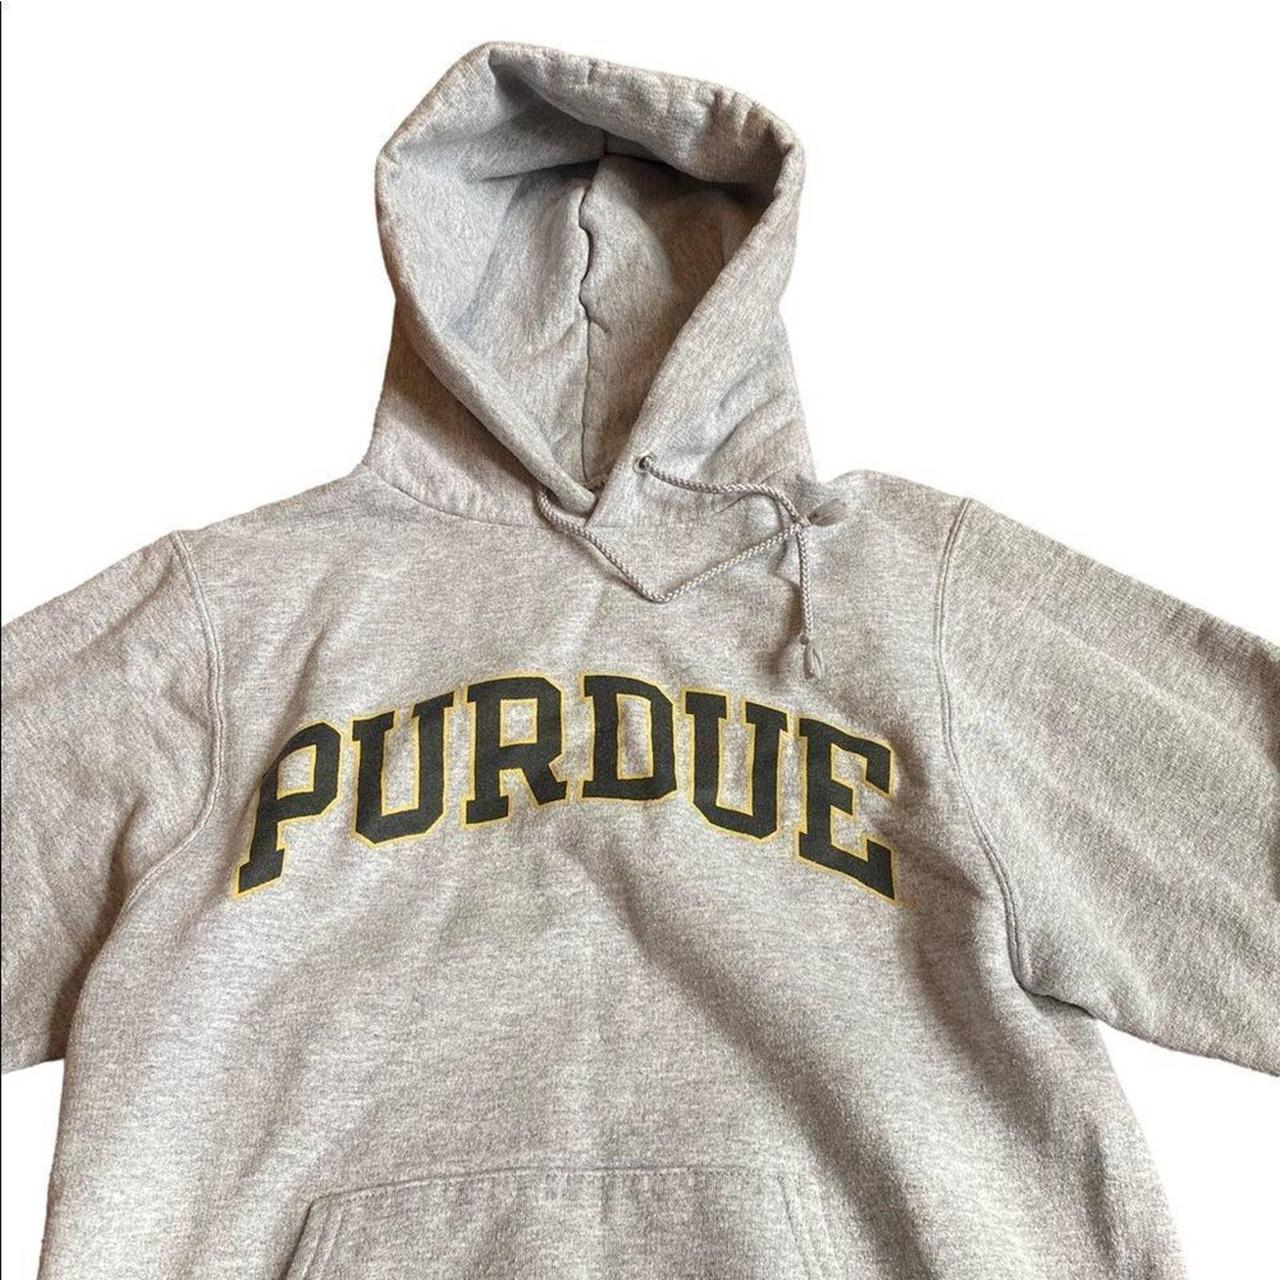 Vintage Ladies Champion Purdue hoodies size XS #Tik... - Depop